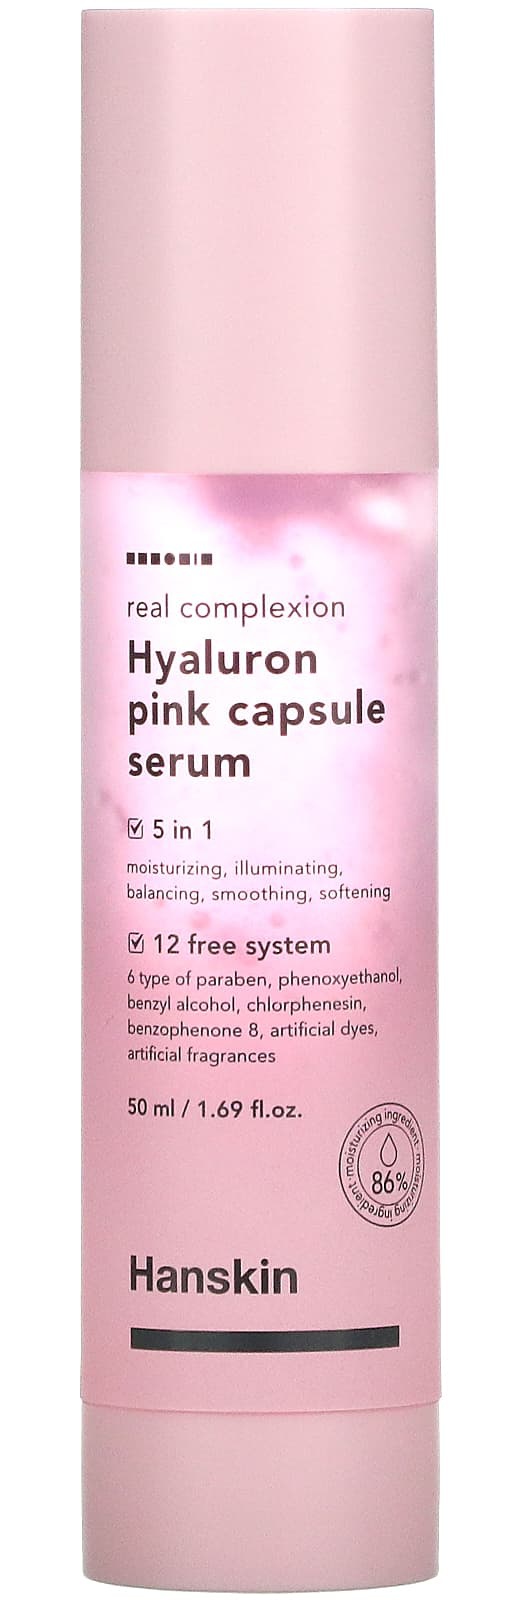 Hanskin Real Complexion Hyaluron Pink Capsule Serum